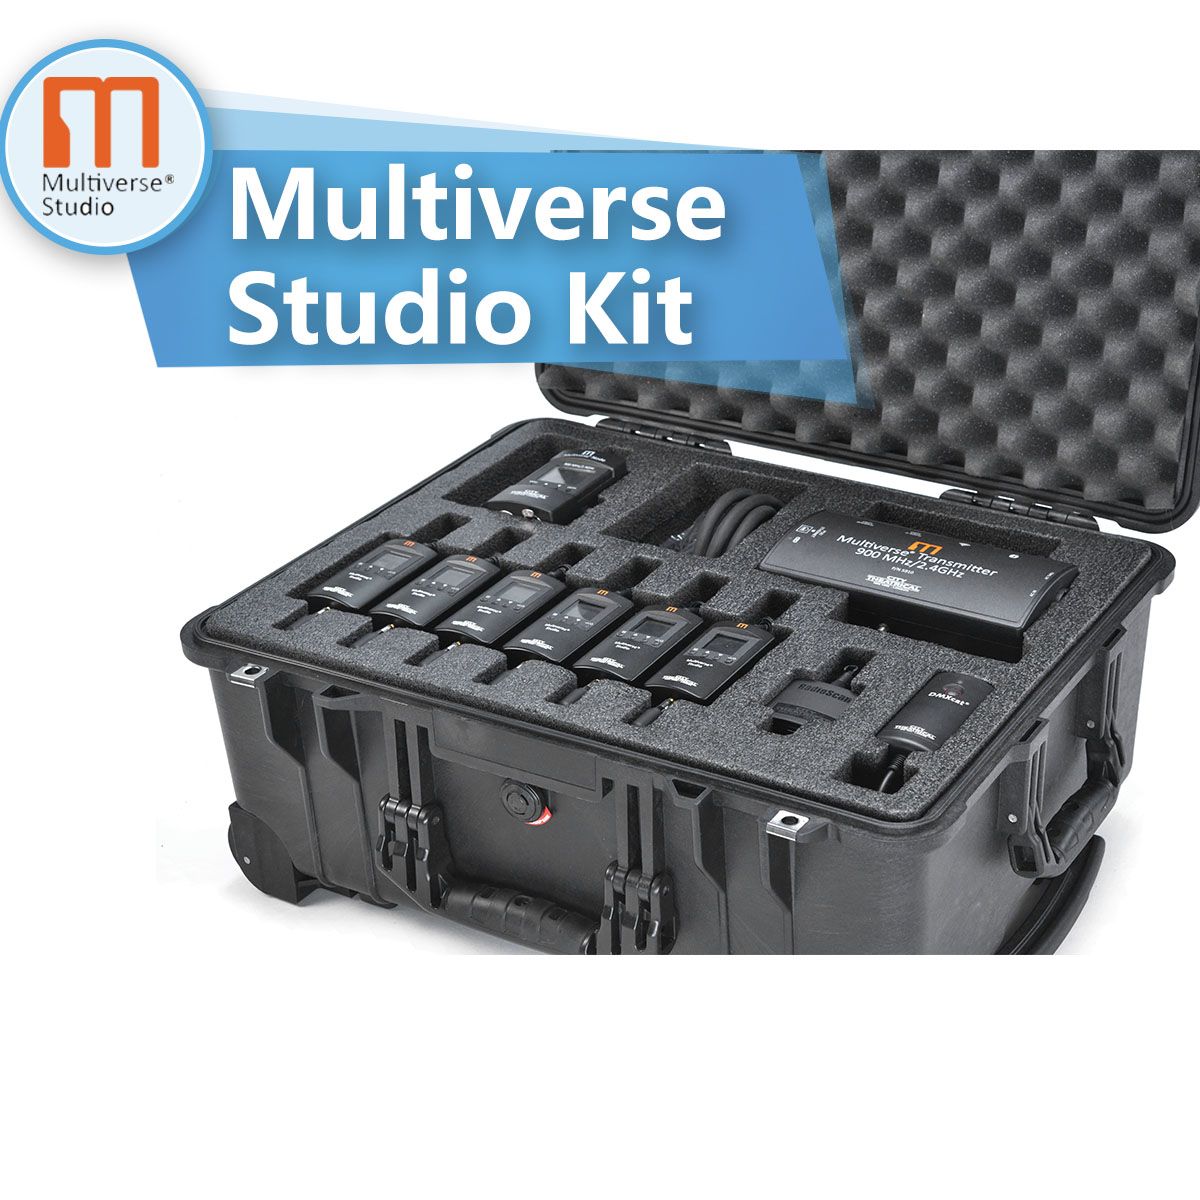 Multiverse Studio Kit